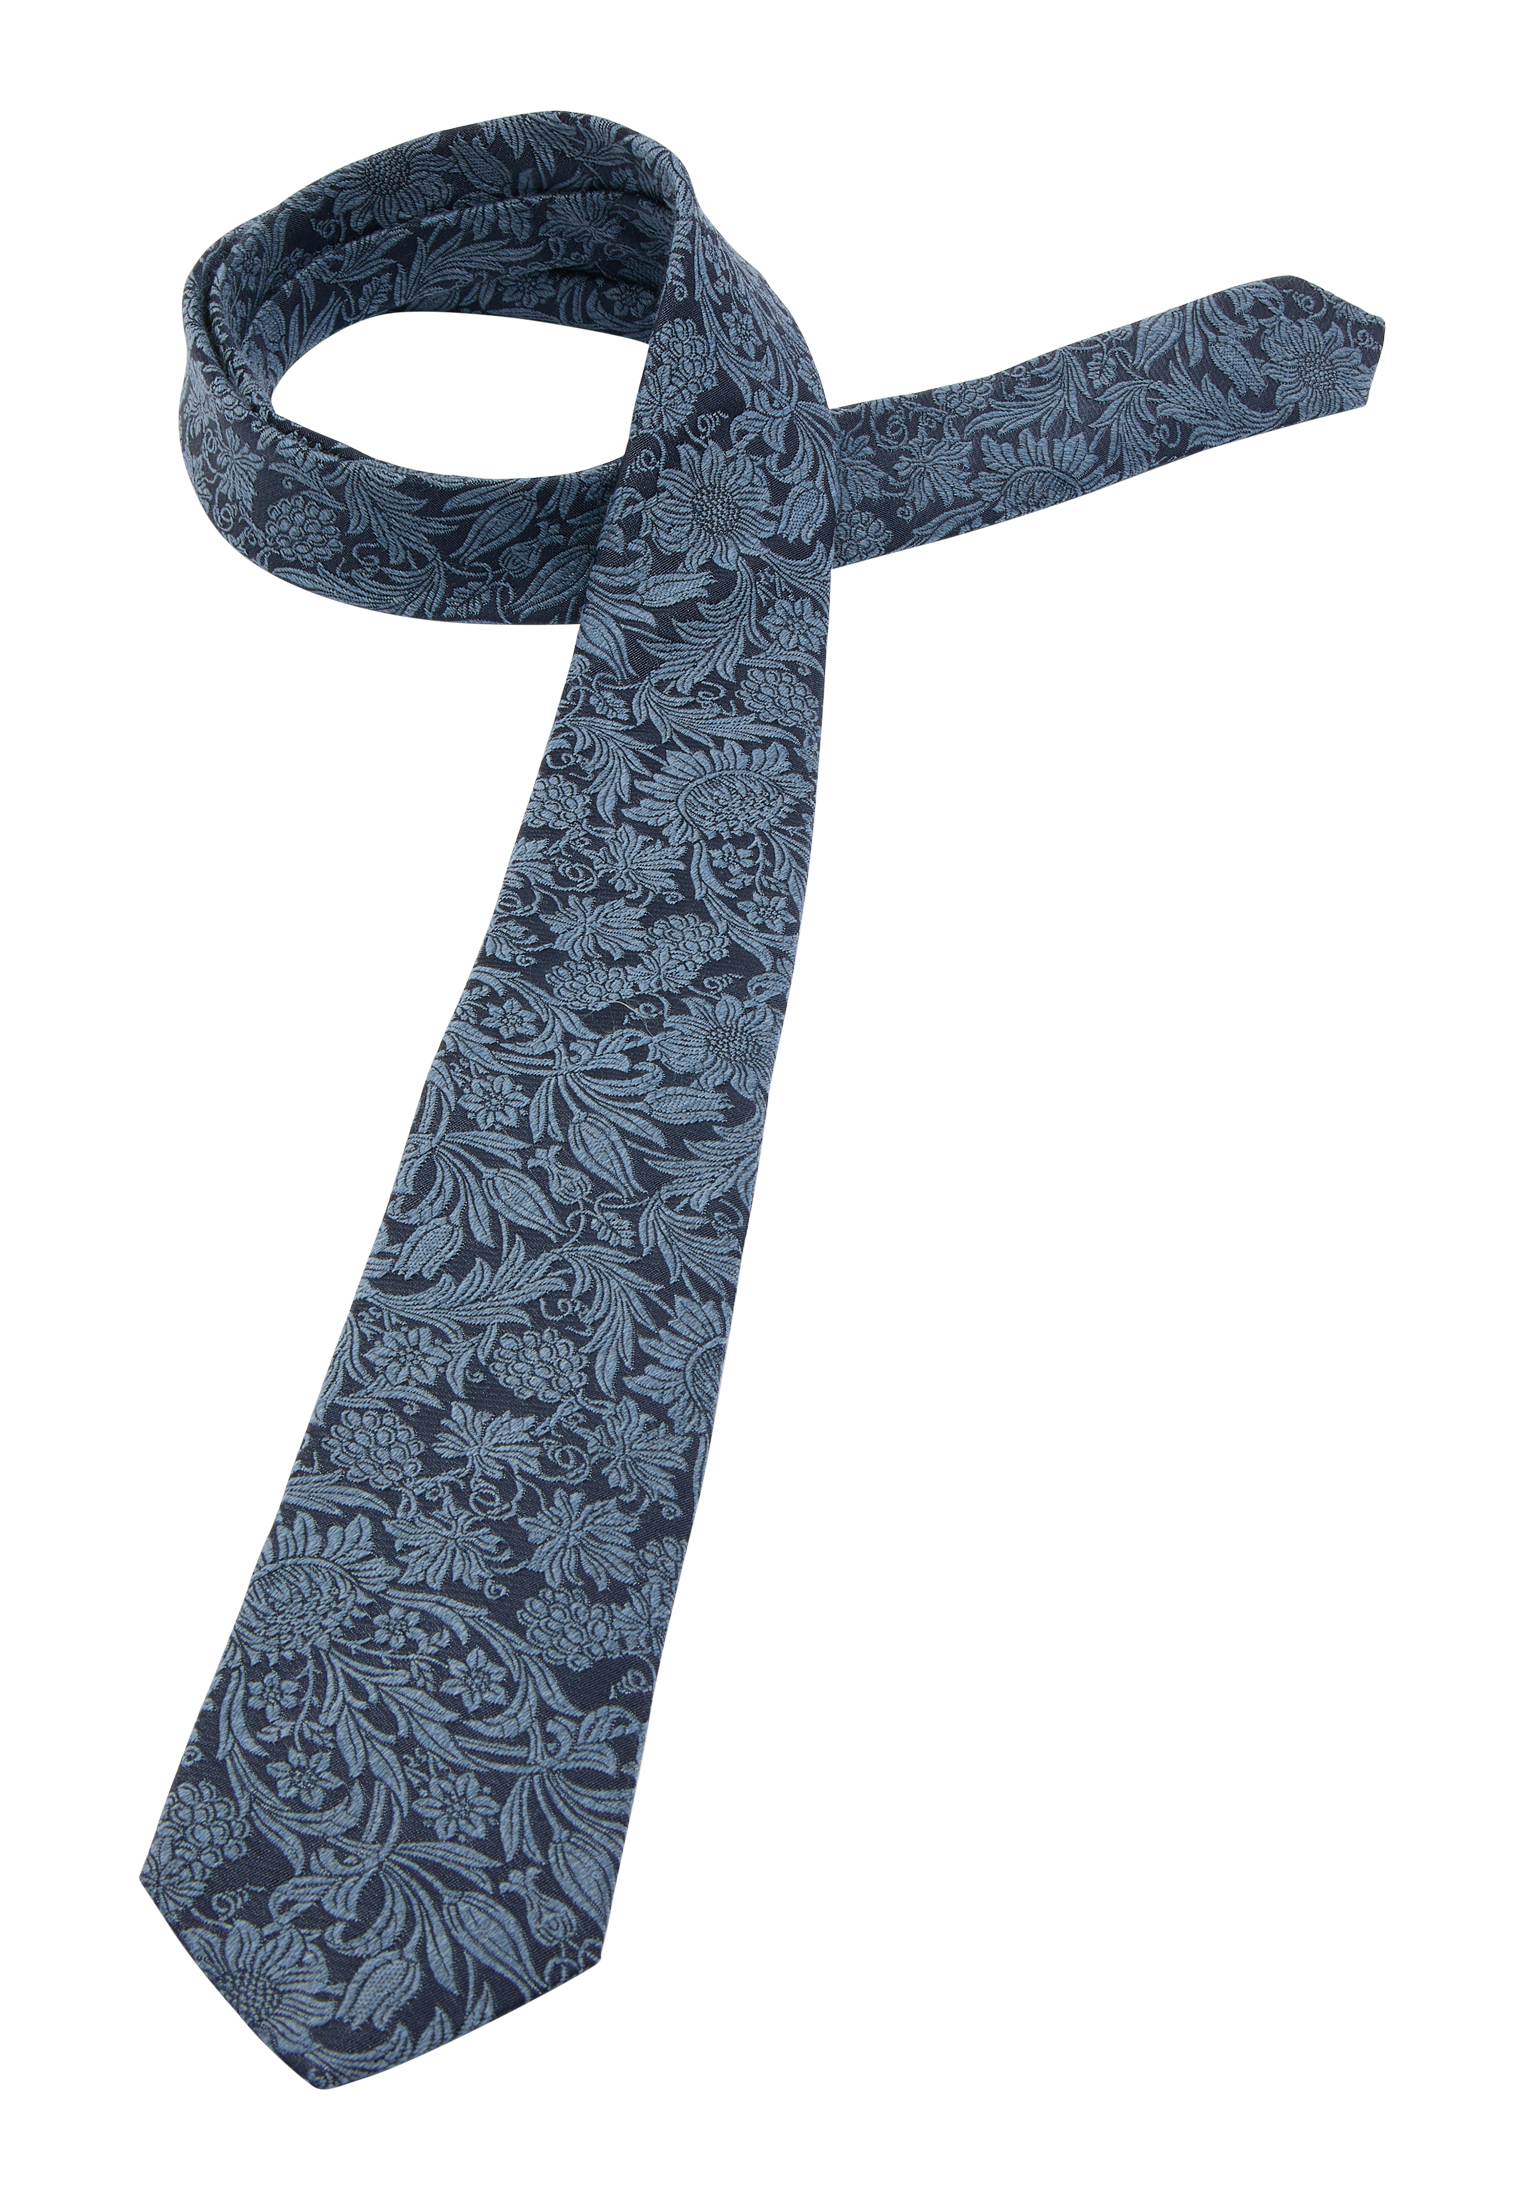 Tie in blue 142 | | dark patterned | blue 1AC01901-01-81-142 dark